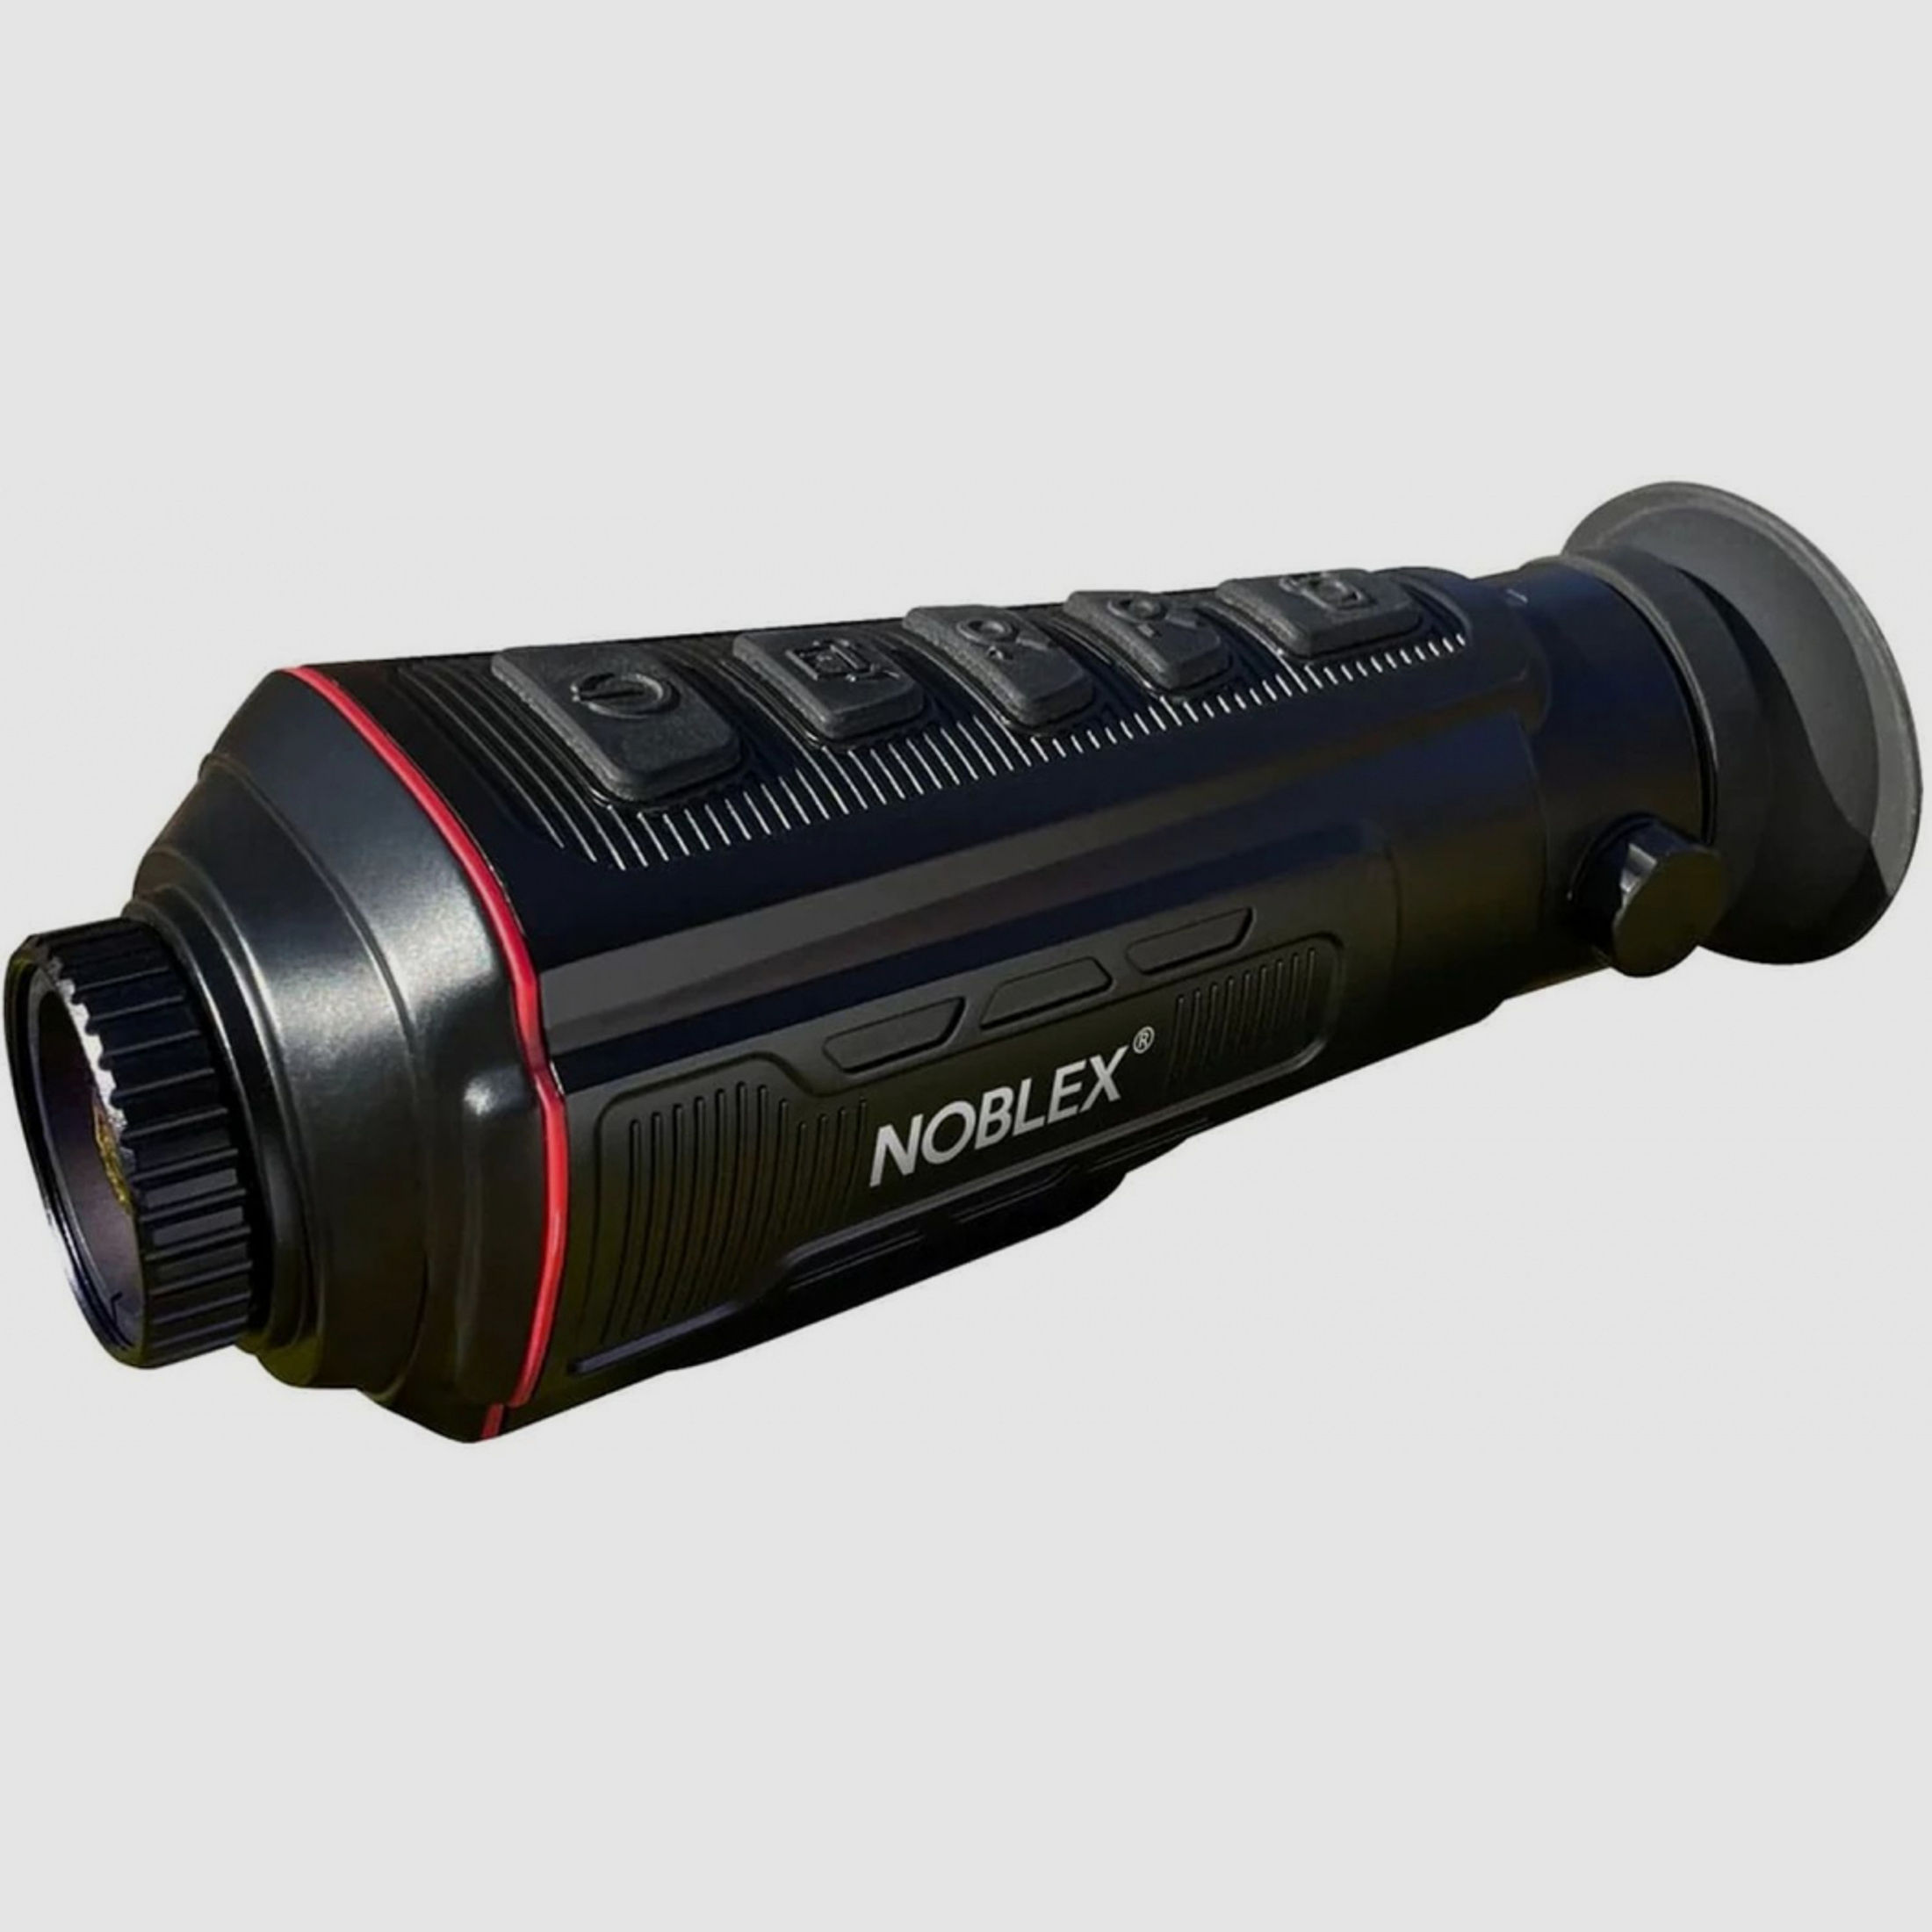 NOBLEX NOBLEX NW 50 SP Spotter Wärmebildkamera